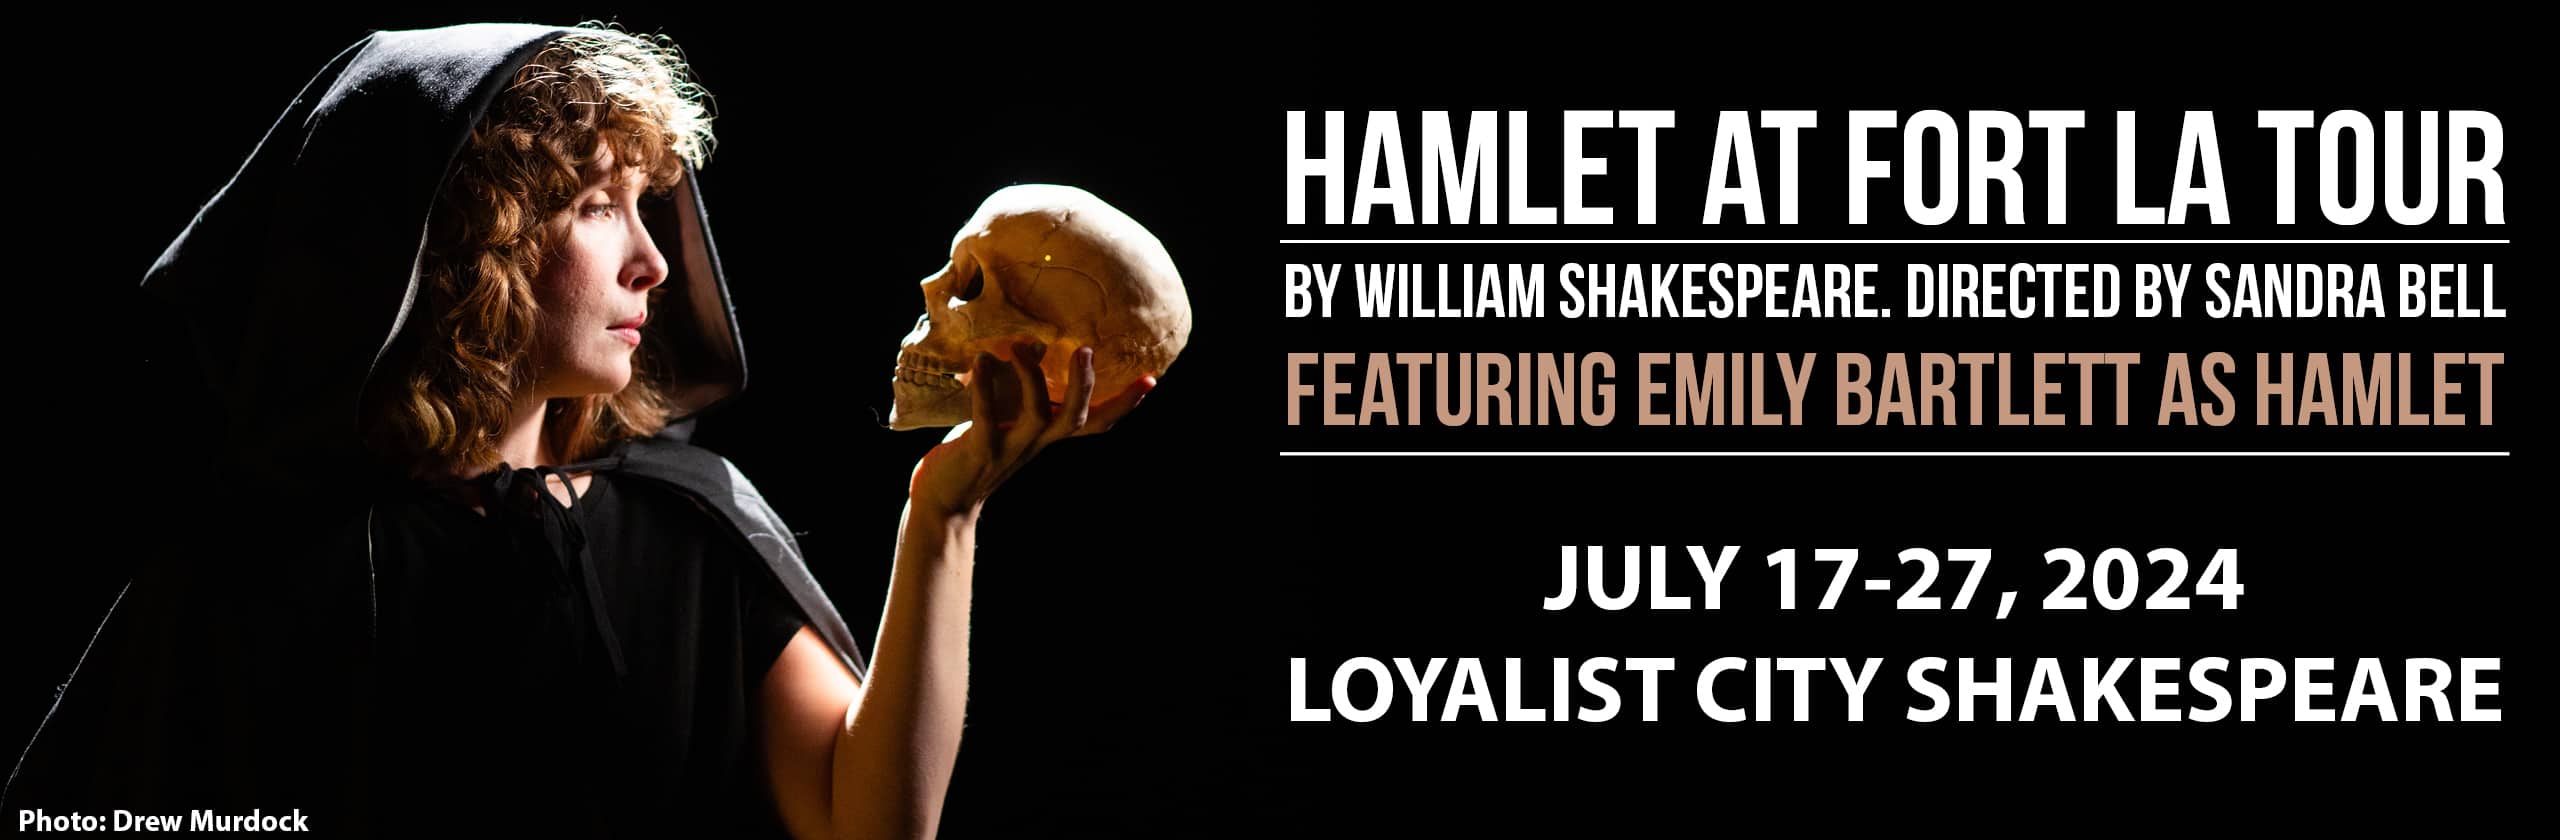 Hamlet at Fort La Tour